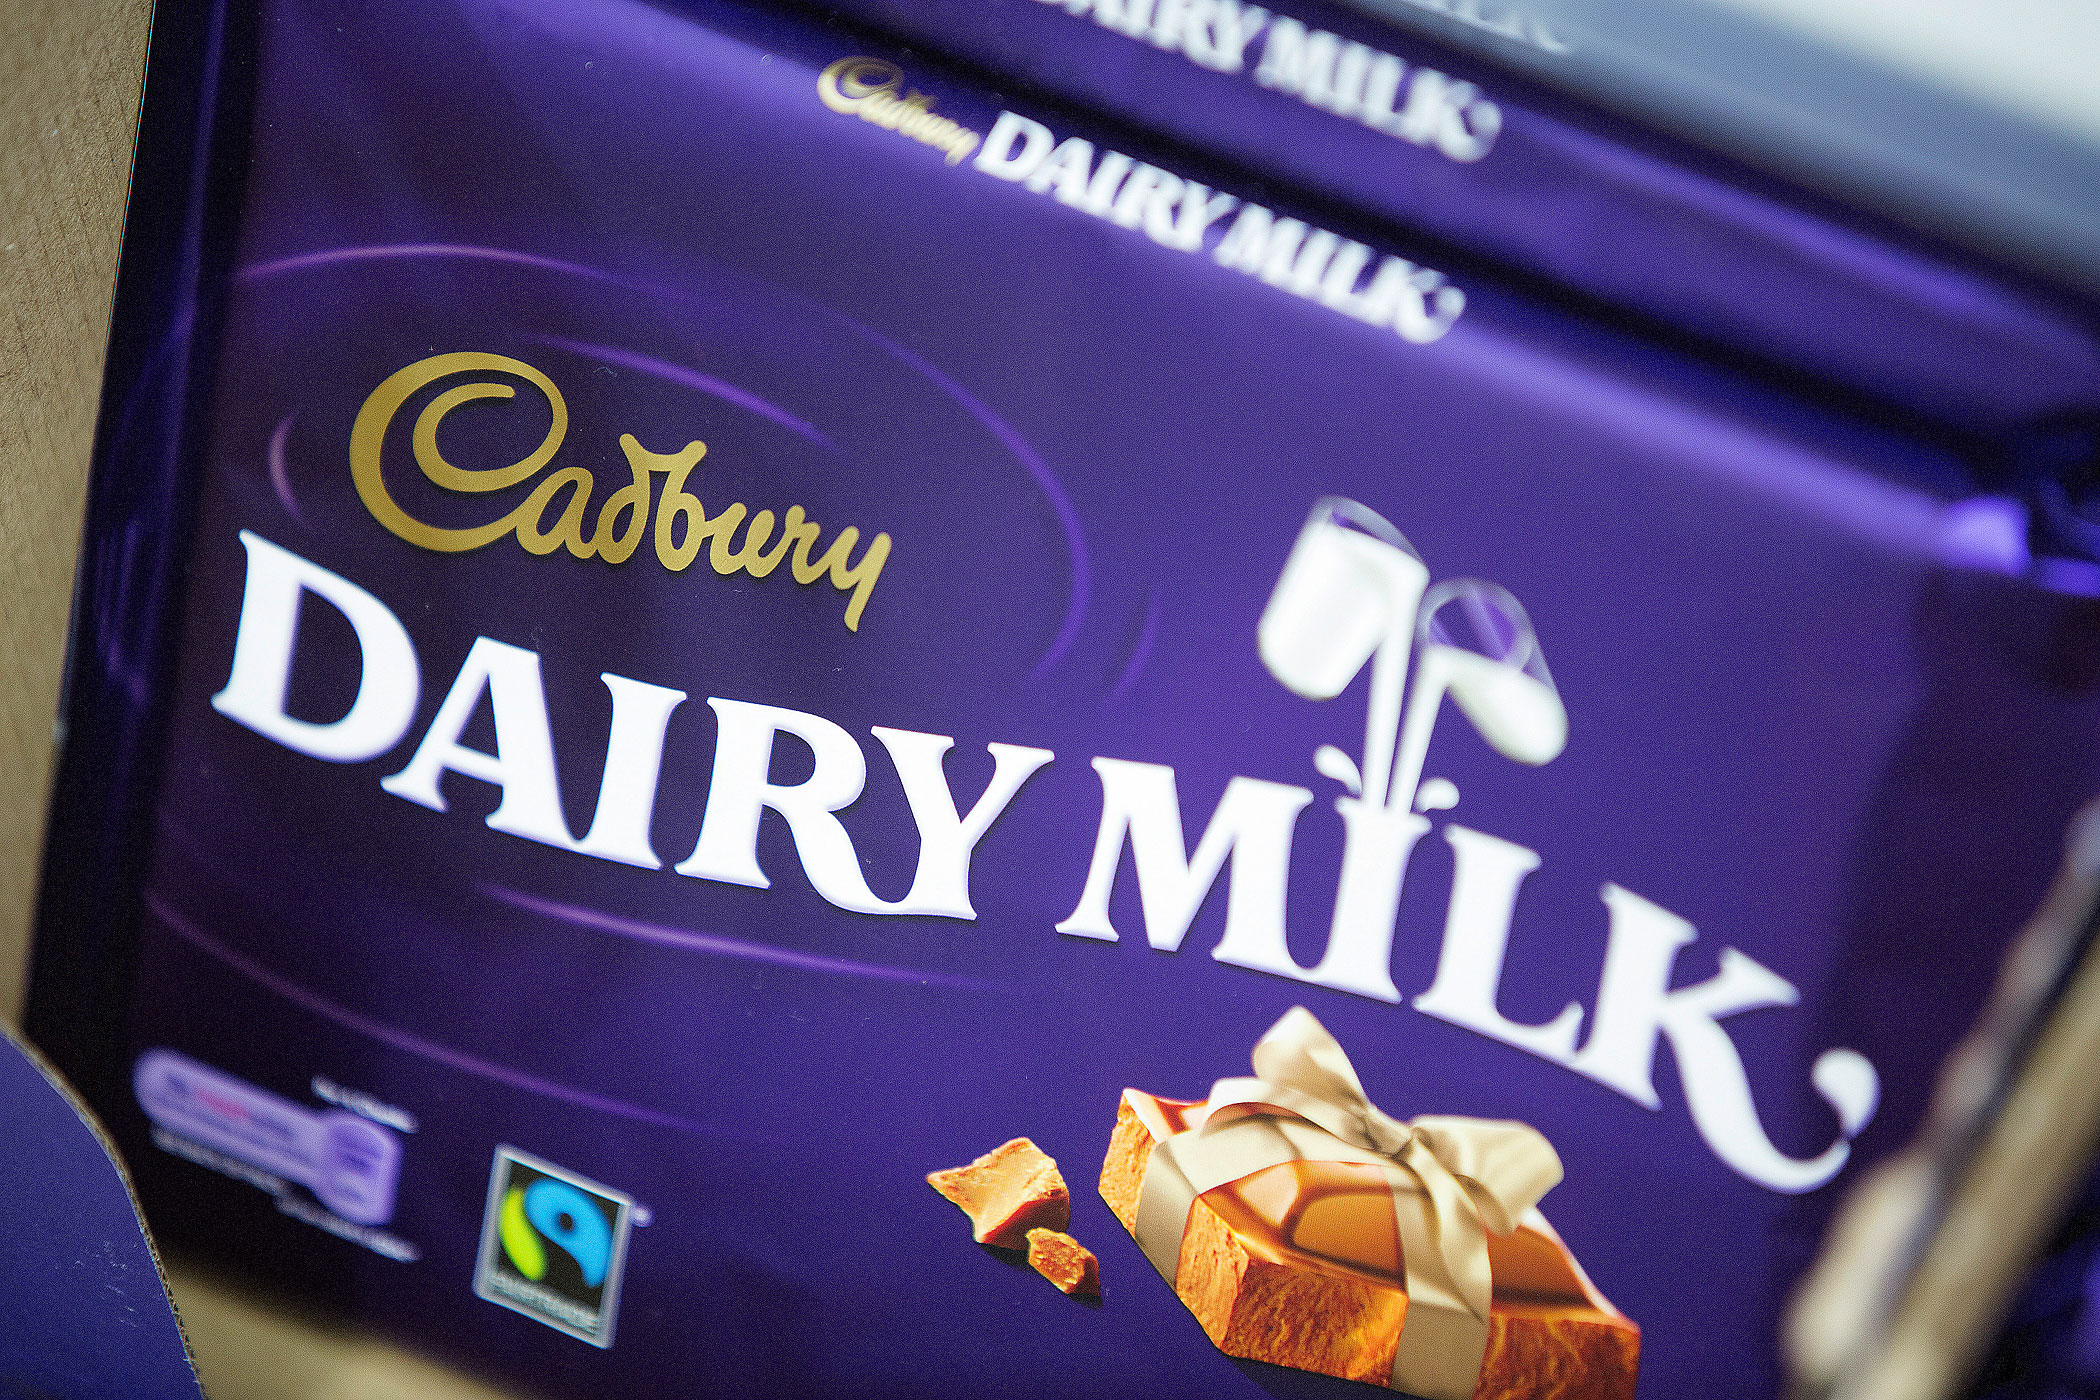 Cadbury "Dairy Milk" chocolate is displayed for sale inside an Asda supermarket in Watford, U.K., on Oct. 17, 2013. (Simon Dawson—Bloomberg/Getty Images)